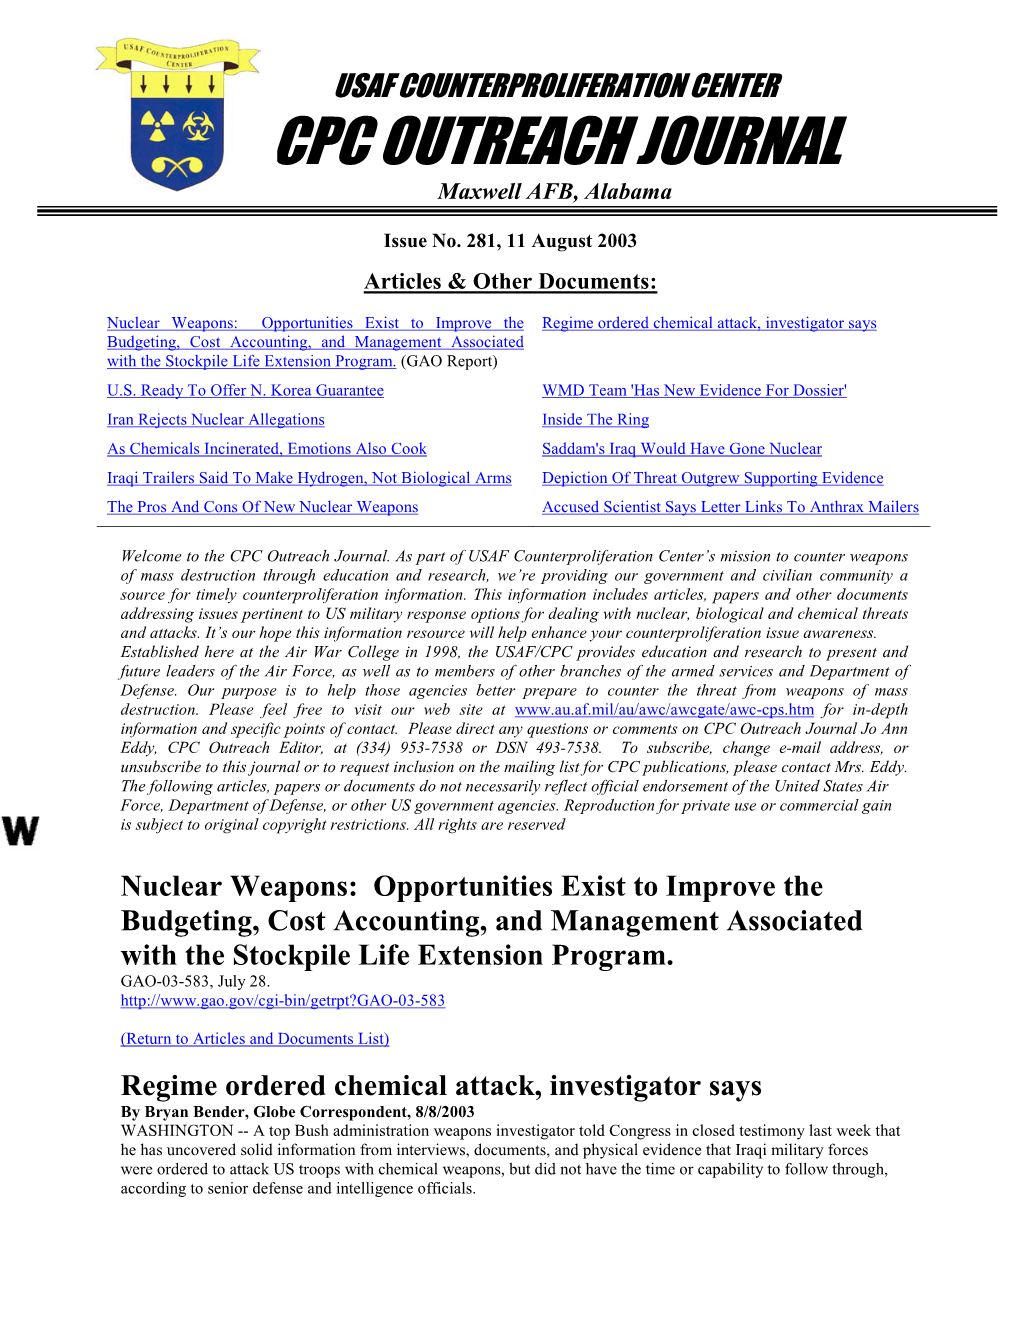 USAF Counterproliferation Center CPC Outreach Journal #281